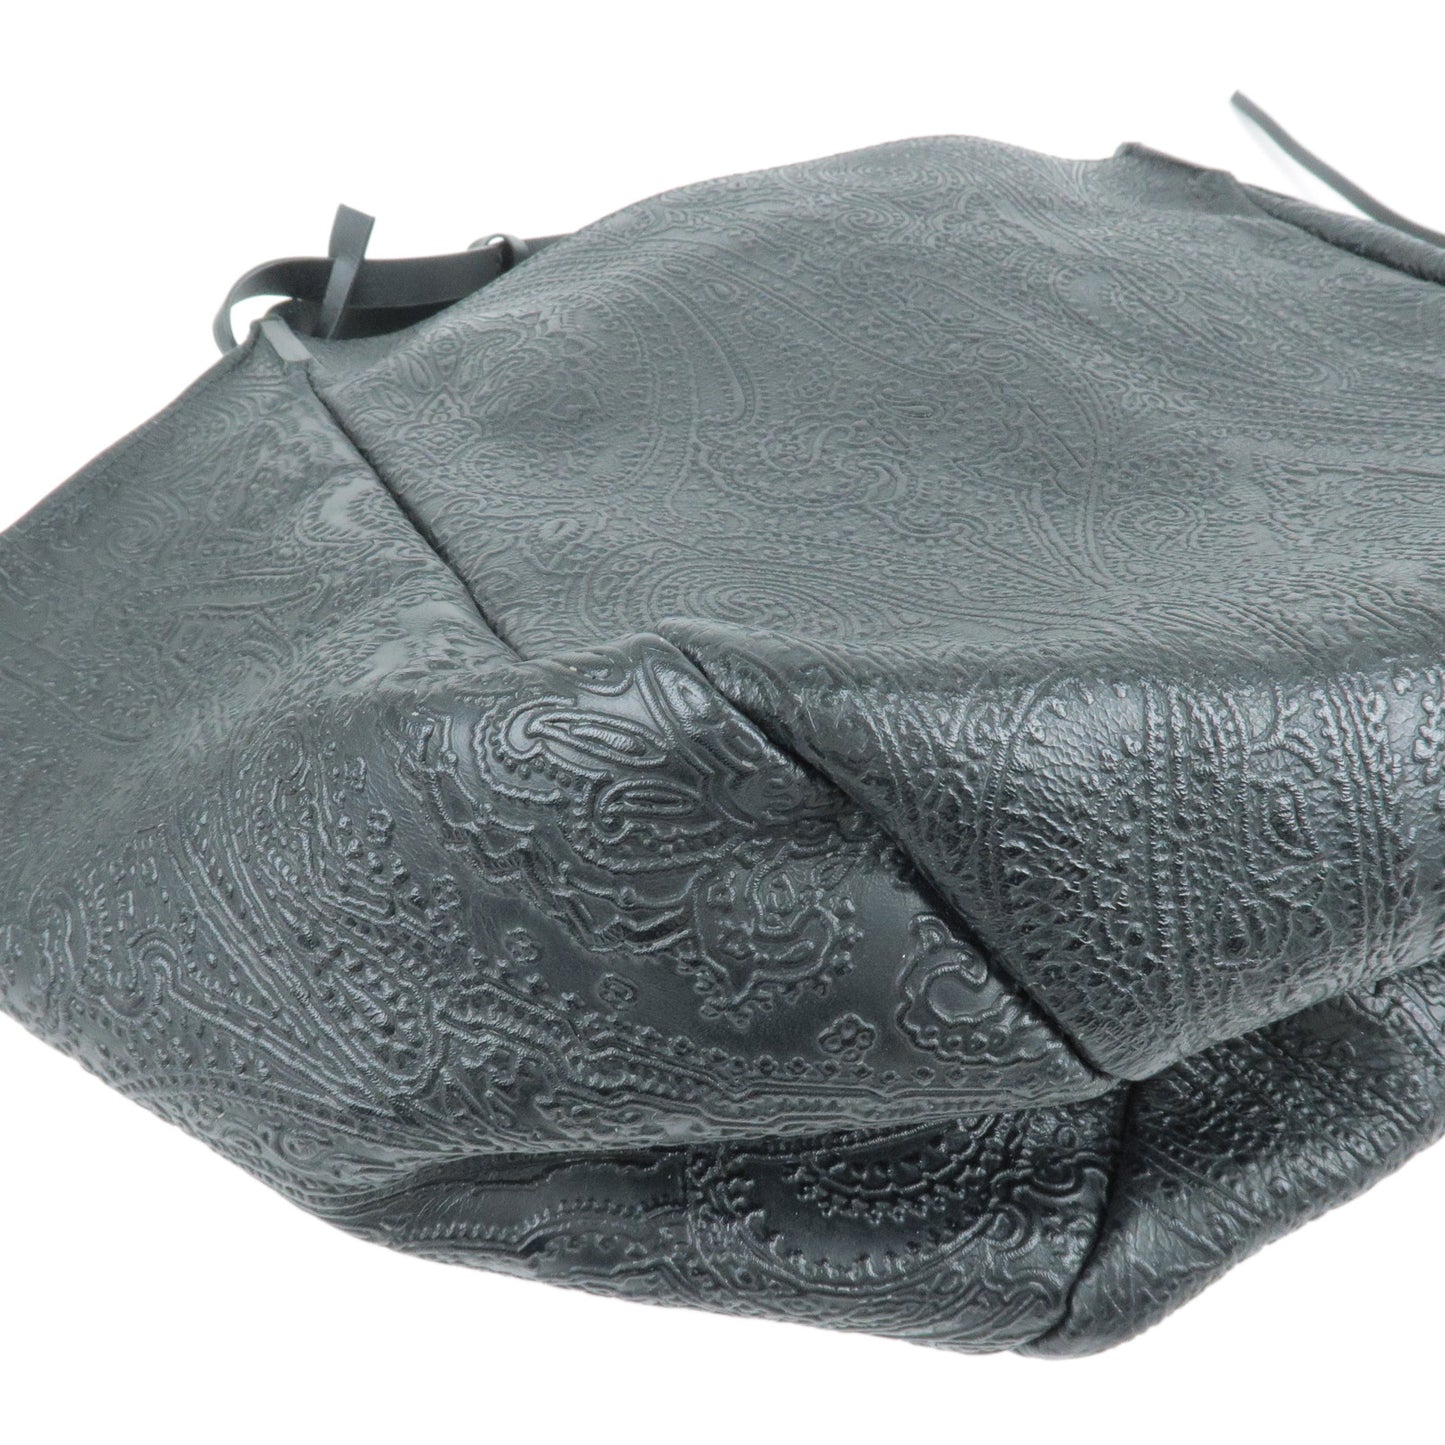 ETRO Leather Paisley Embossed Tote Bag Shoulder Bag Black